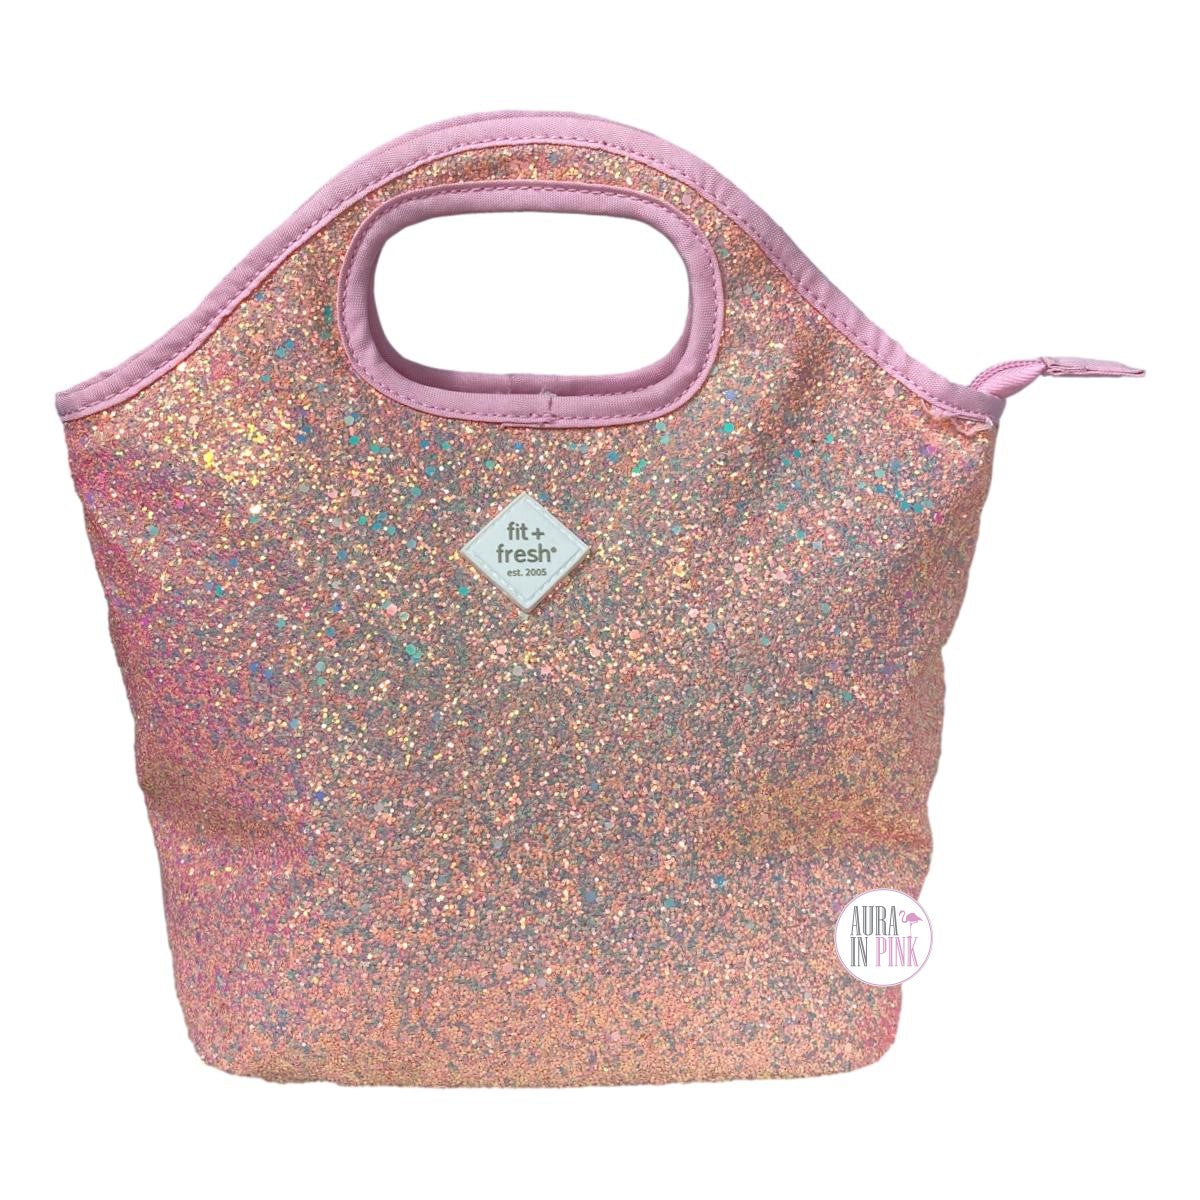 Fit & Fresh - Sloane Chunky Glitter Bag Pink kit